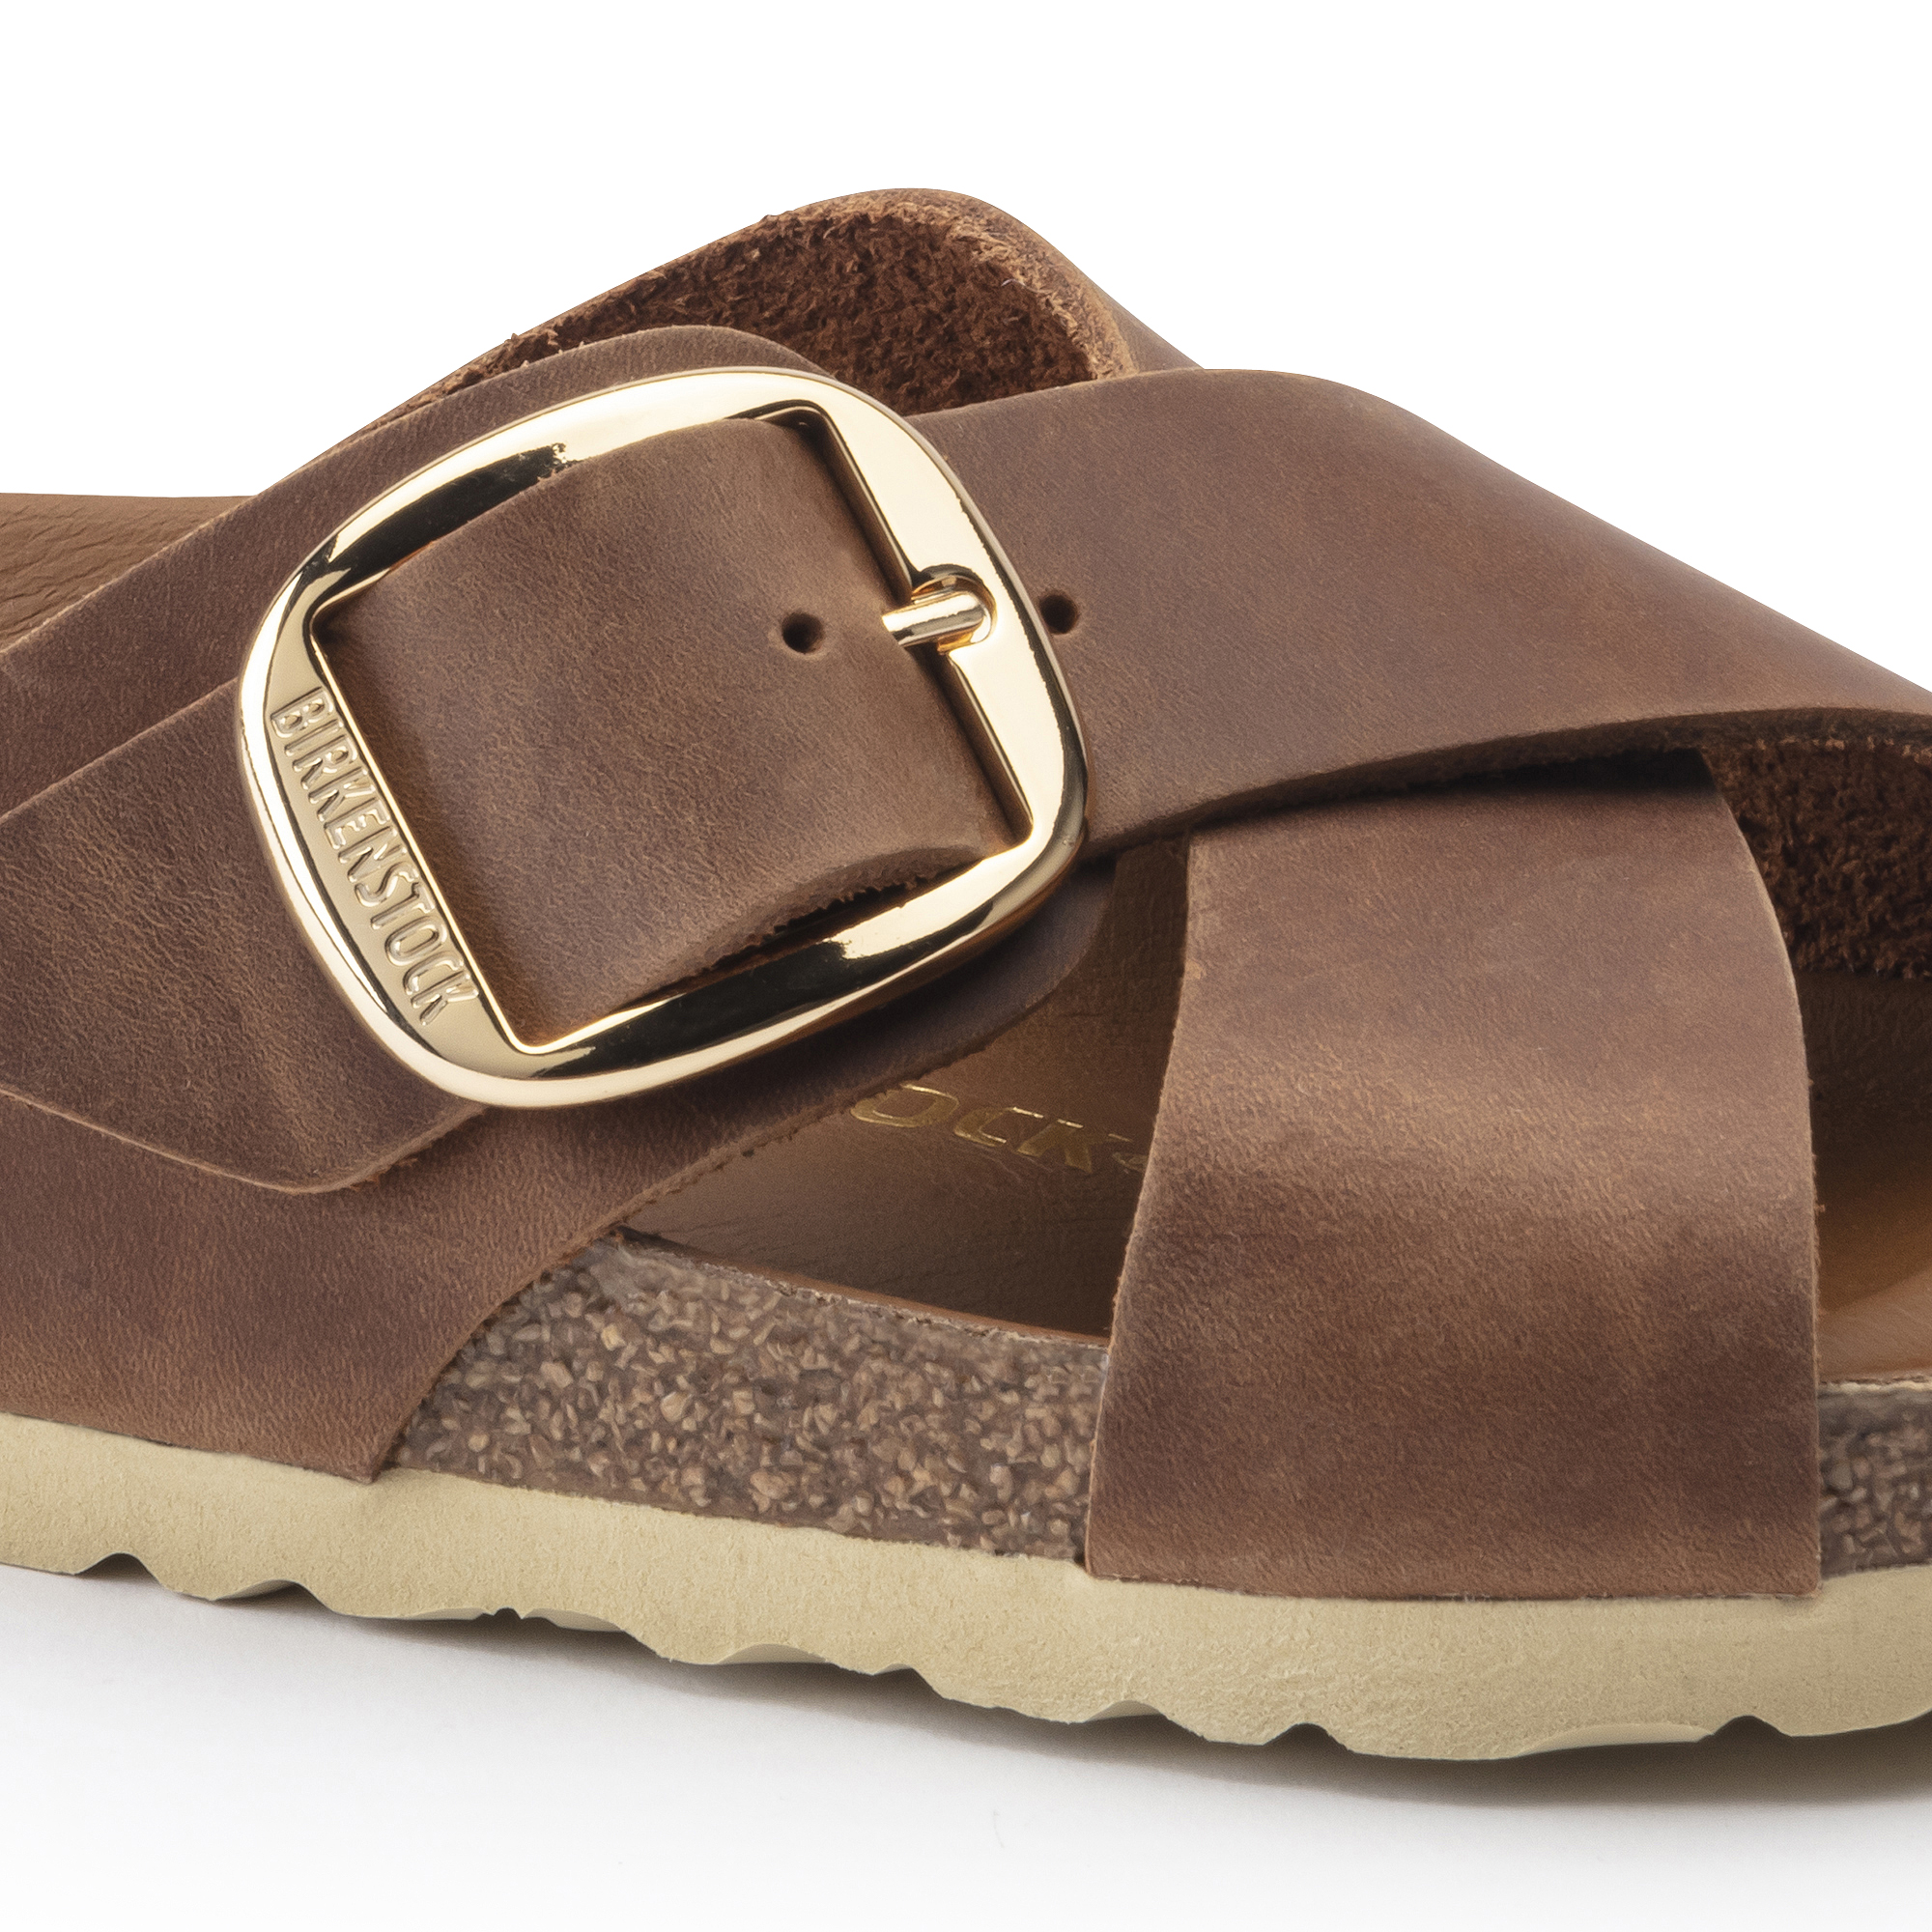 Leather sandals Birkenstock Camel size 38 EU in Leather - 37443851